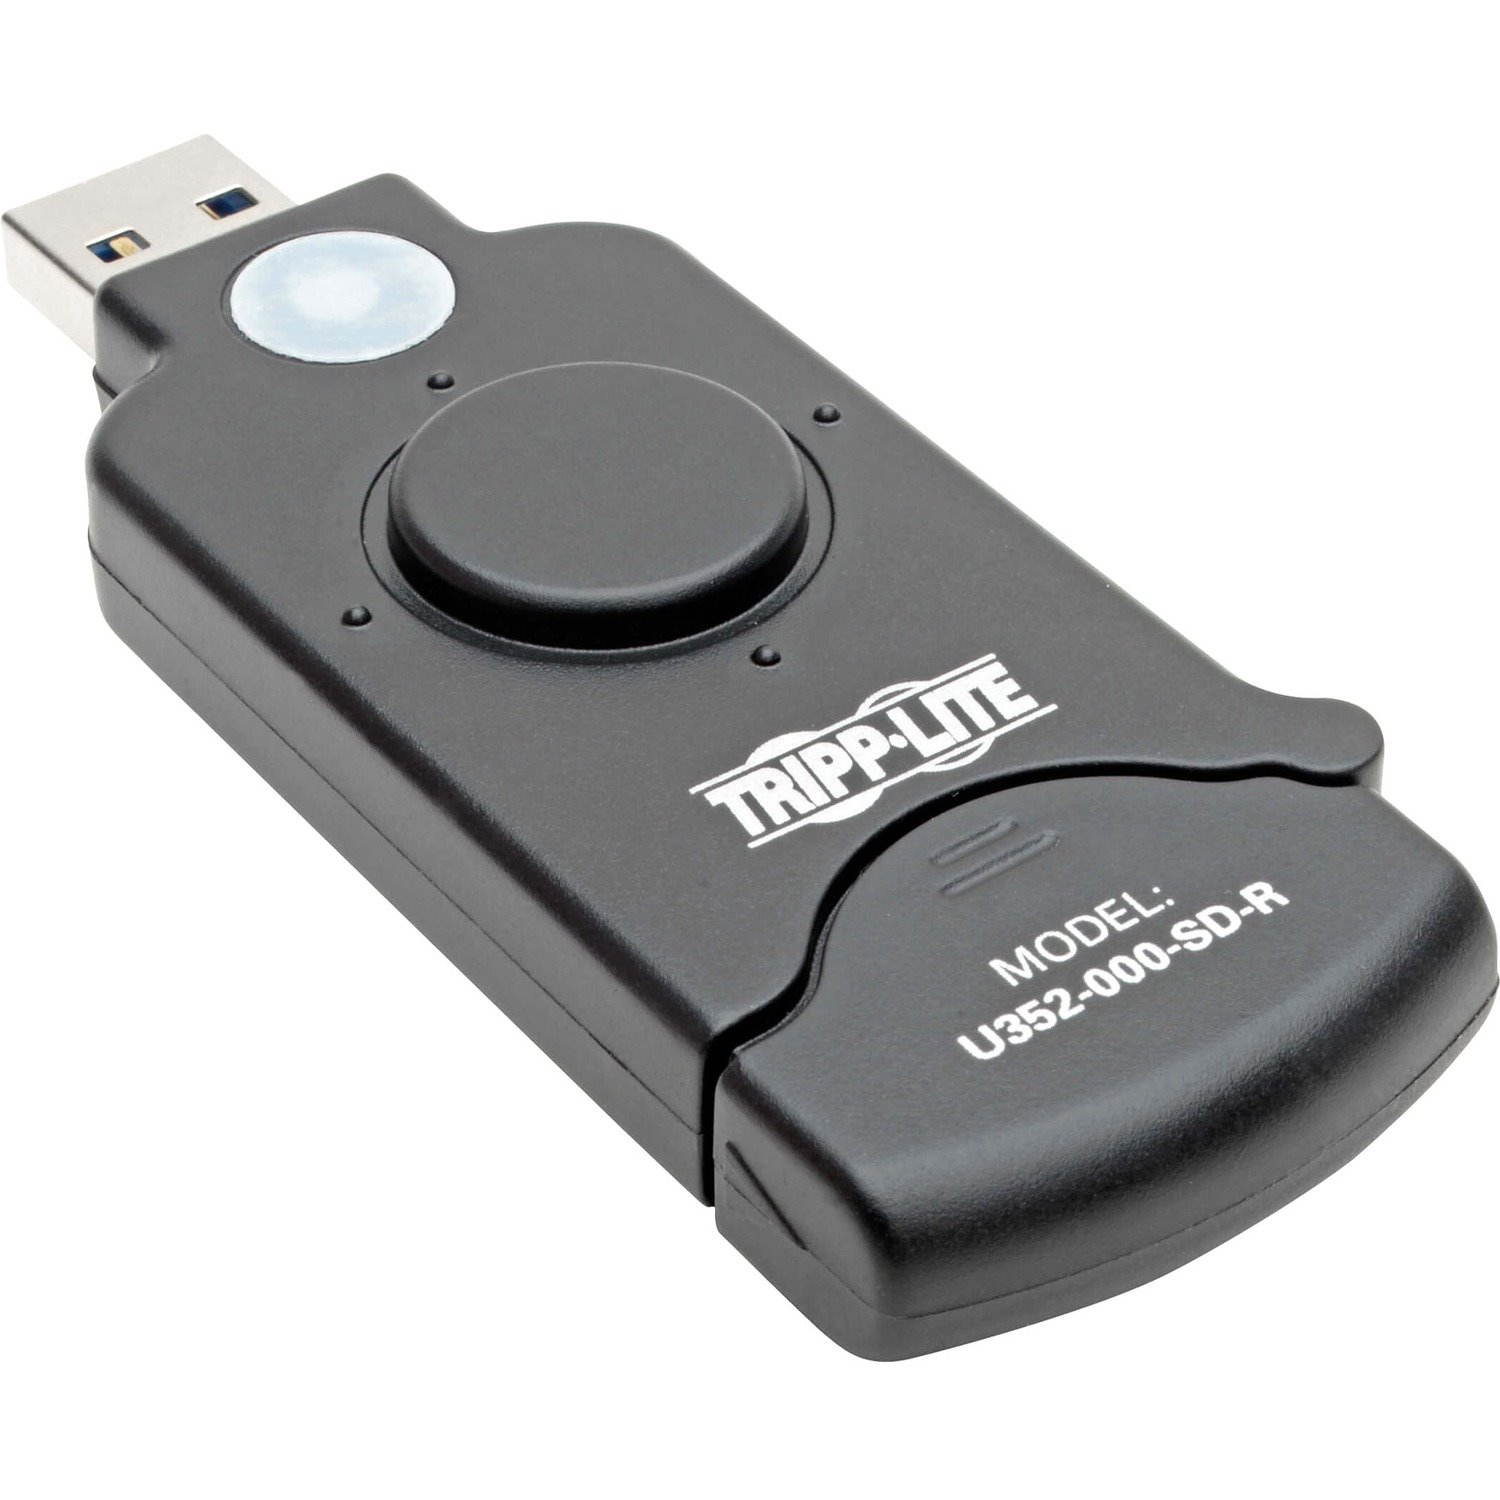 Tripp Lite by Eaton U352-000-SD-R Flash Reader - USB 3.0 - External